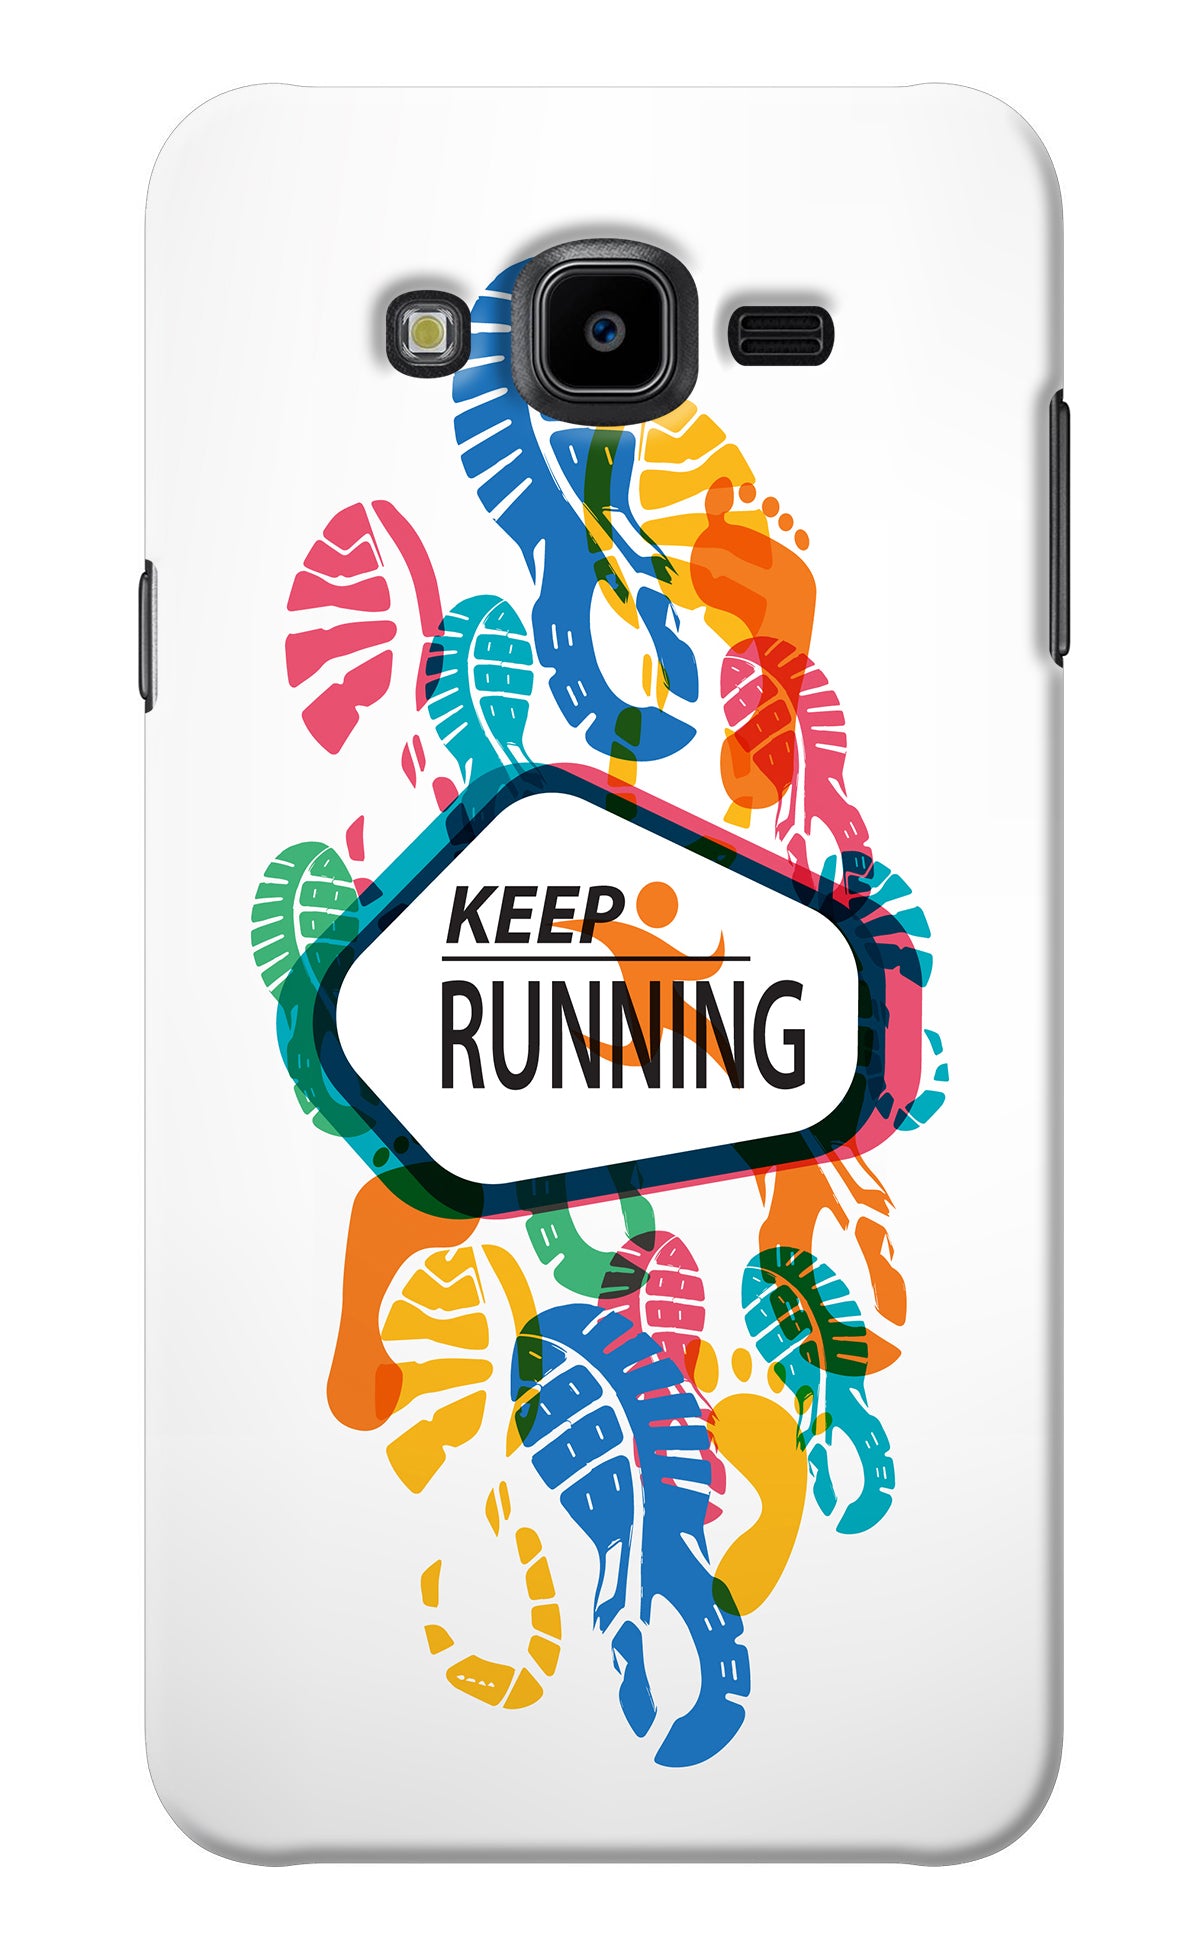 Keep Running Samsung J7 Nxt Back Cover